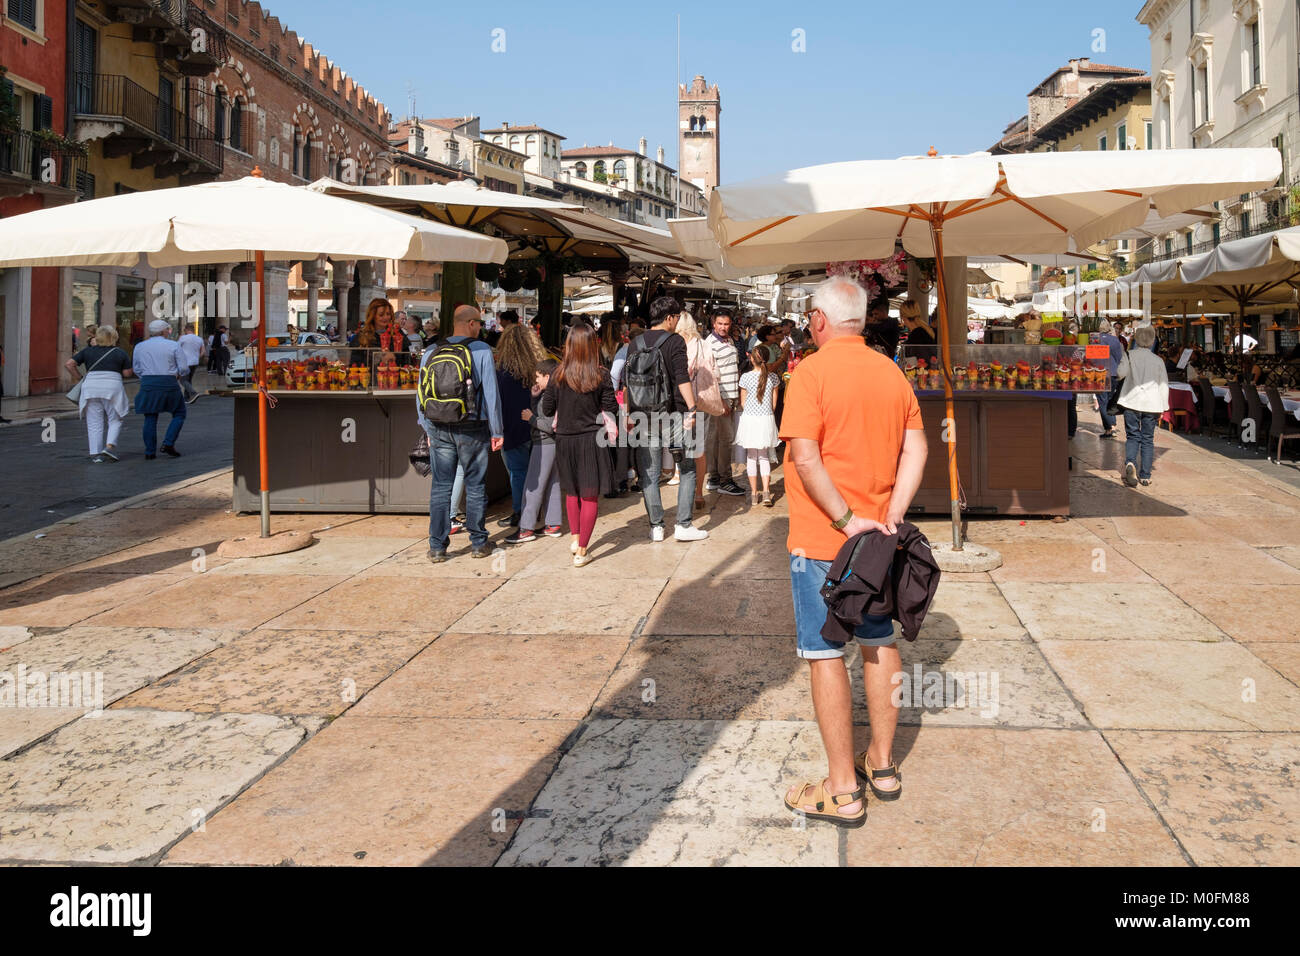 Shopping in the street market, Piazza delle Erbe, Verona, Veneto, Italy Stock Photo